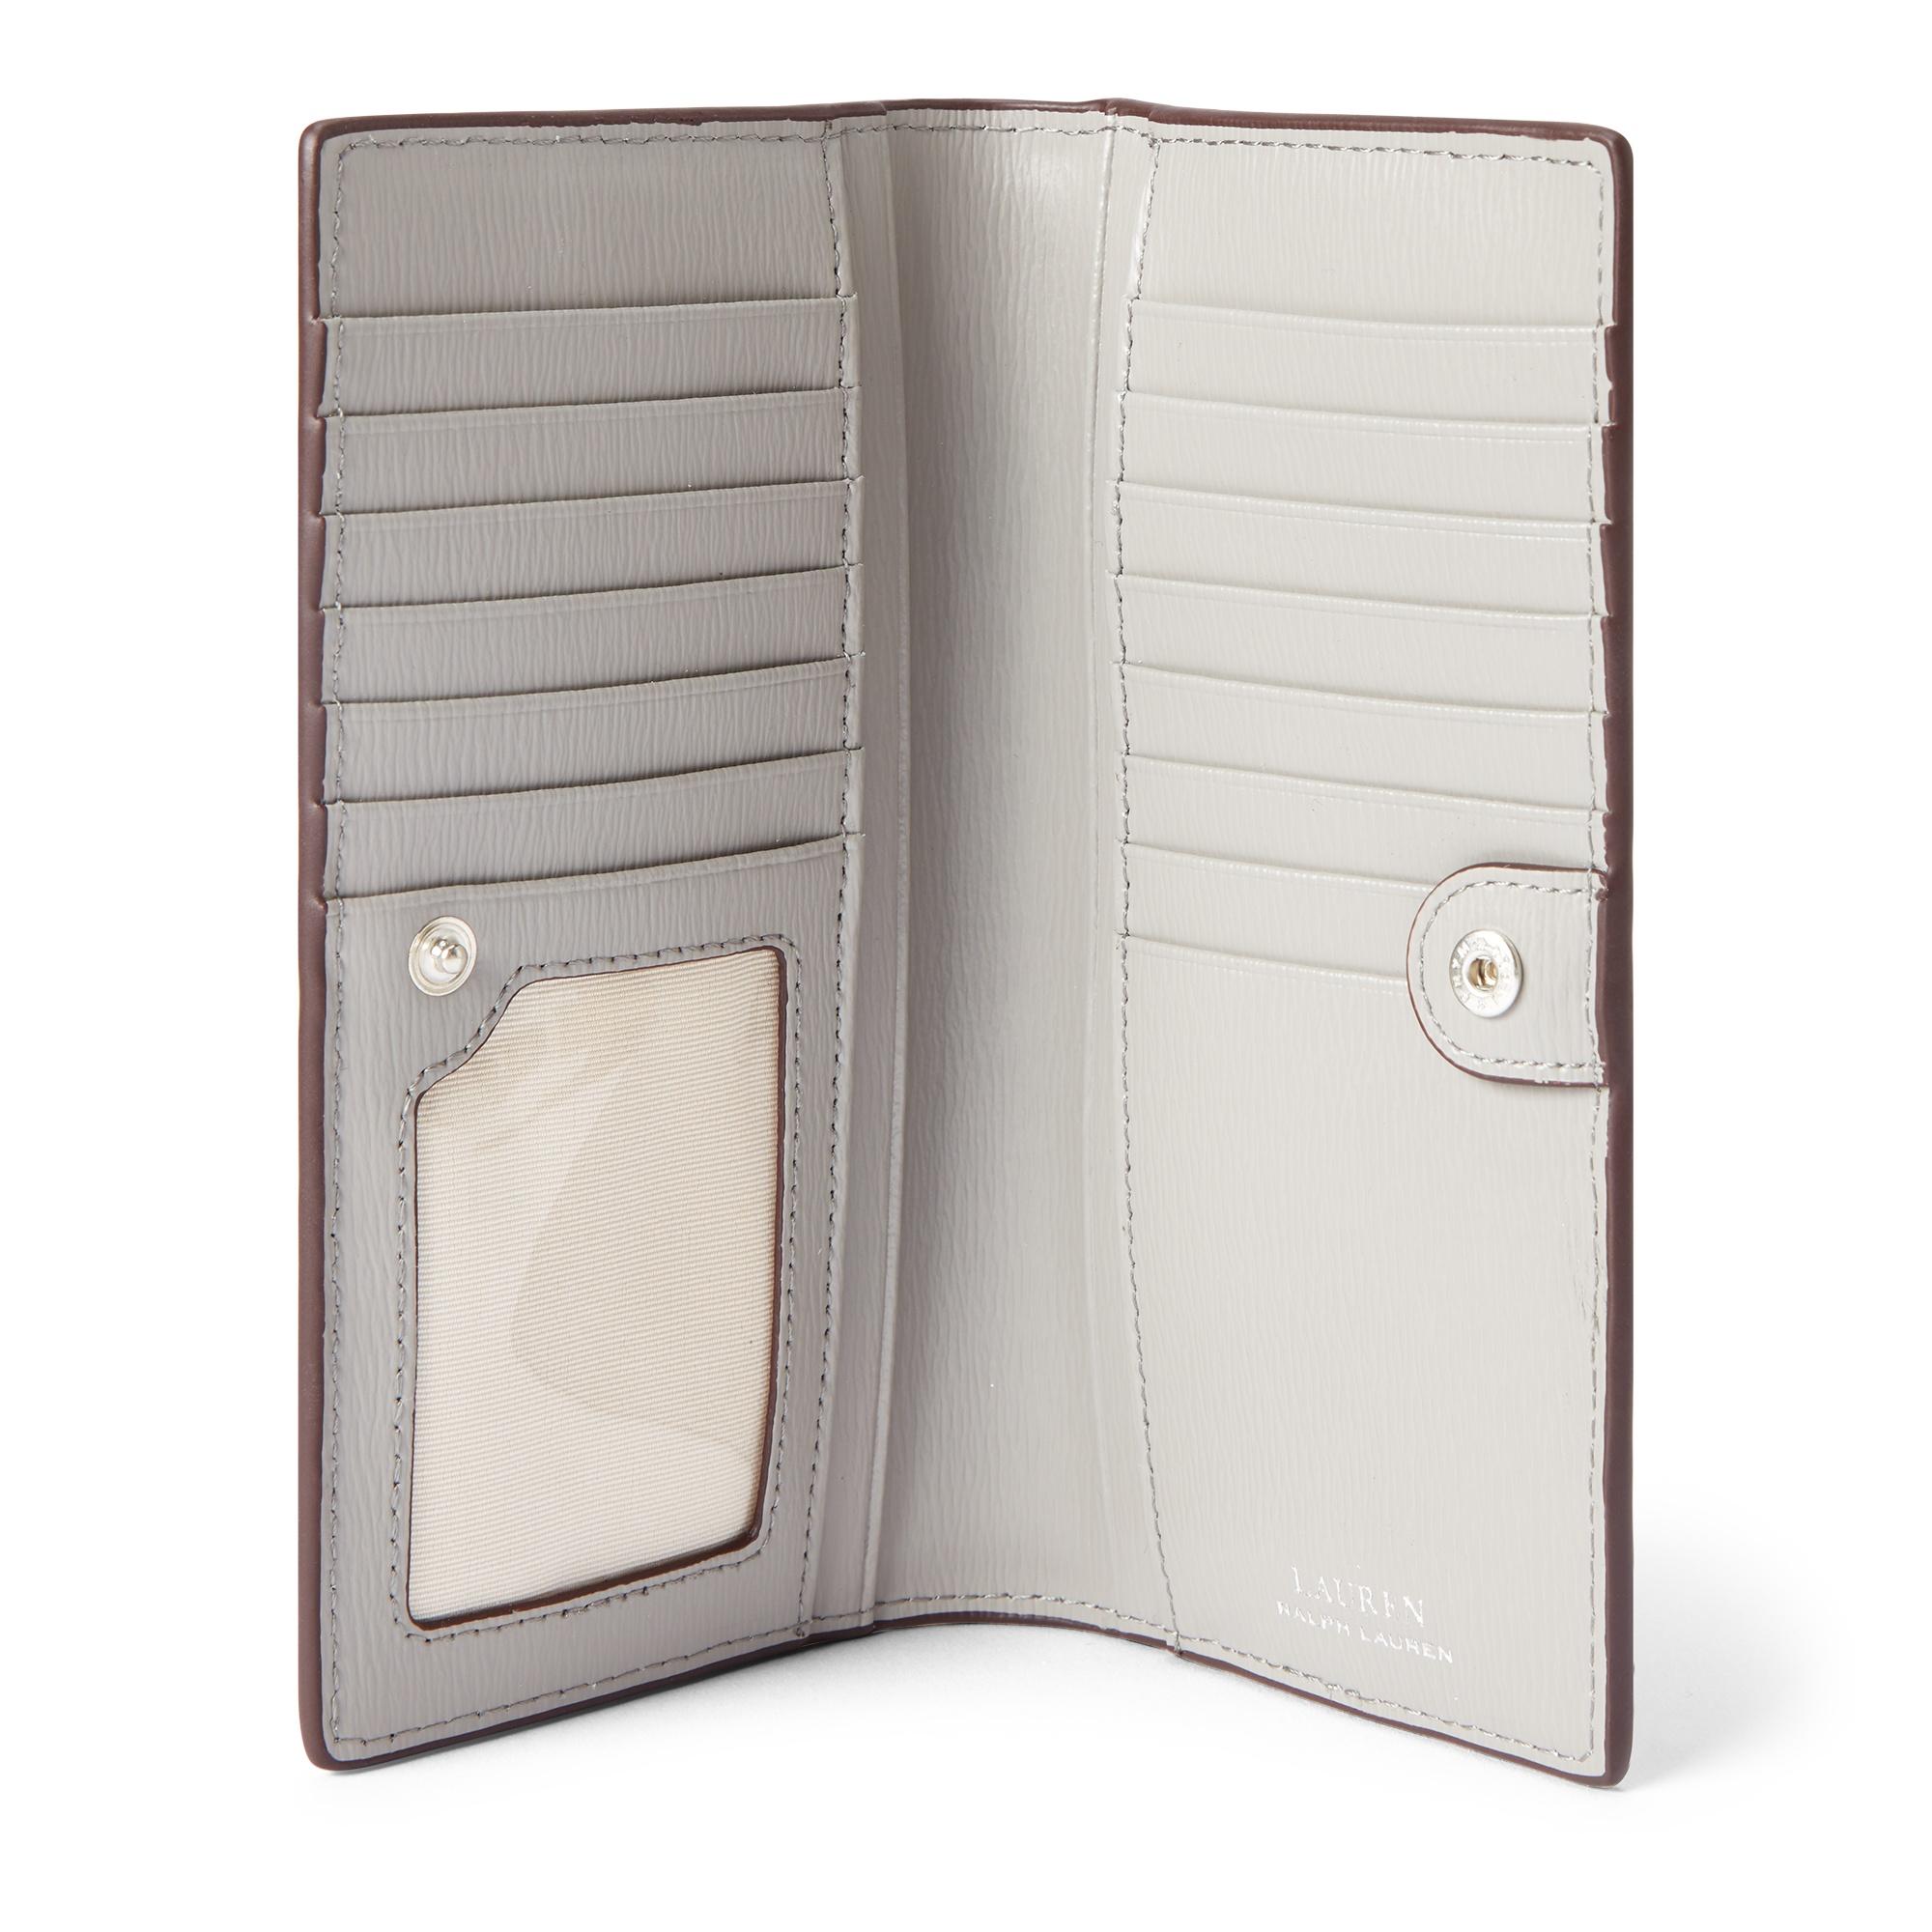 Ralph Lauren Saffiano Slim Leather Wallet in Gray - Lyst